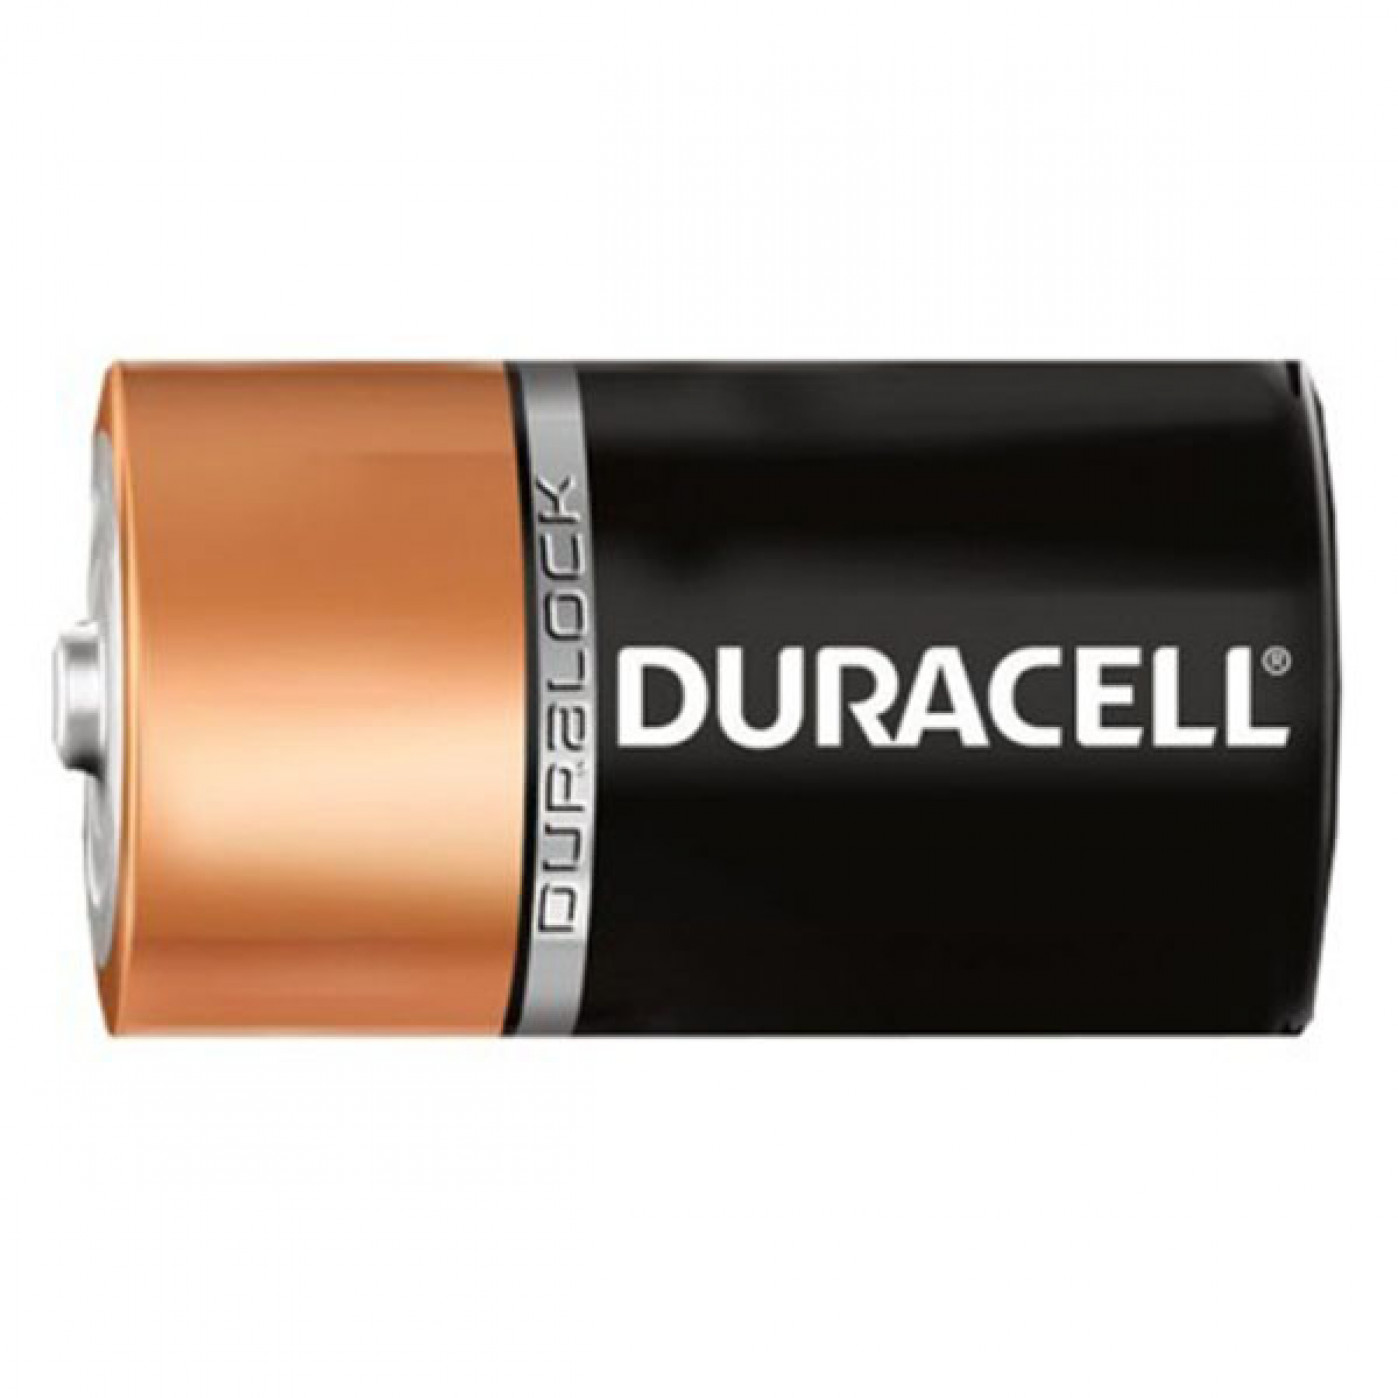  Duracell LR20 BL2 1 шт  в е, подарки по .